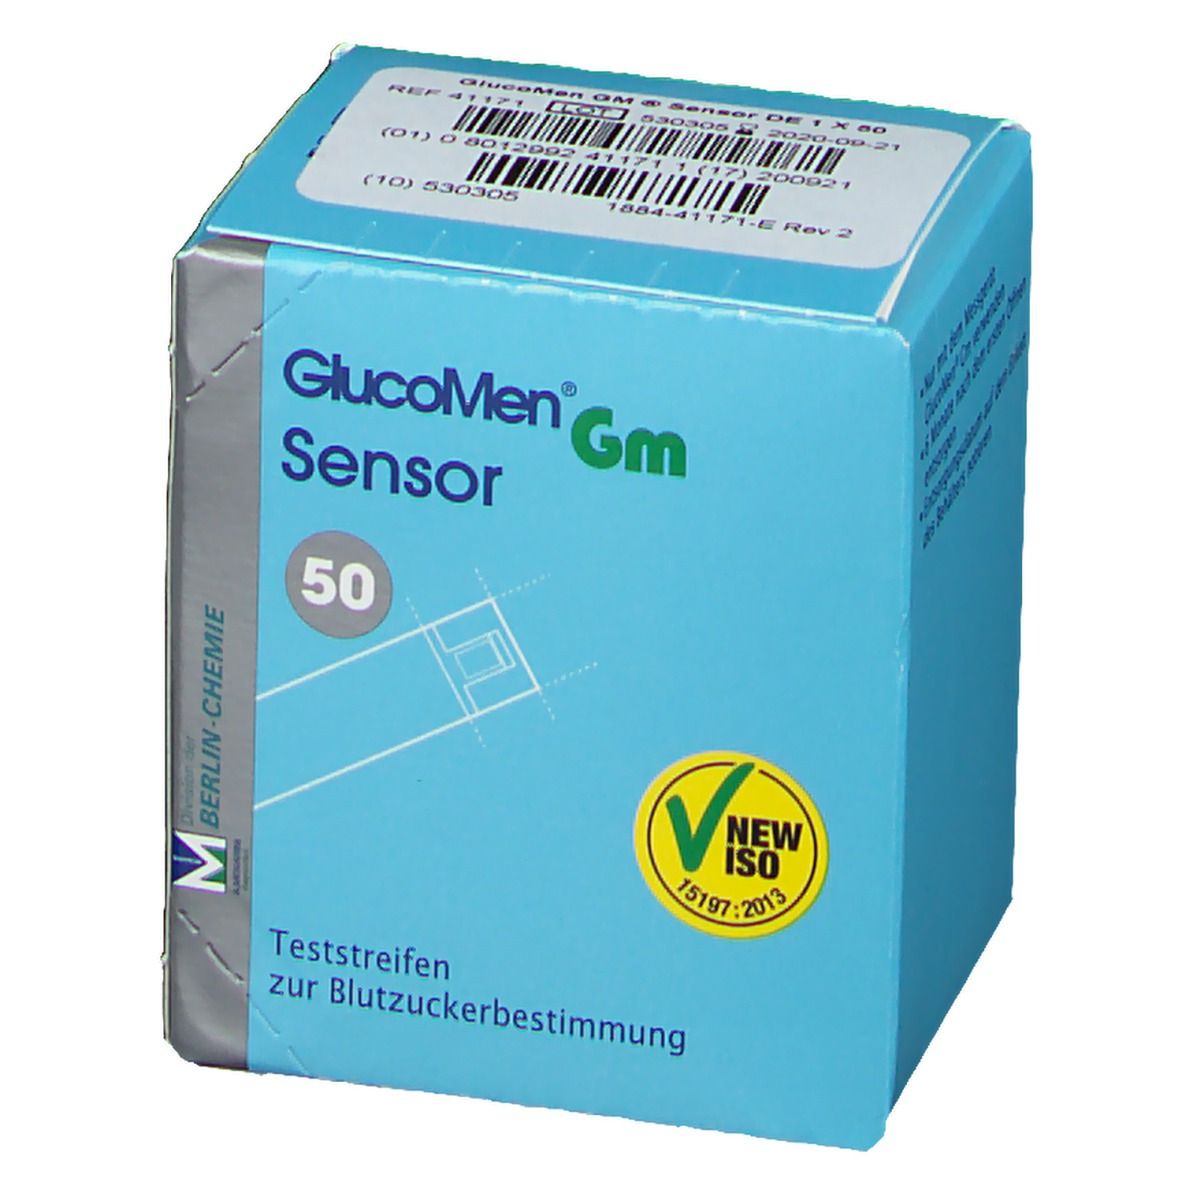 GlucoMen® Gm Sensor Teststreifen